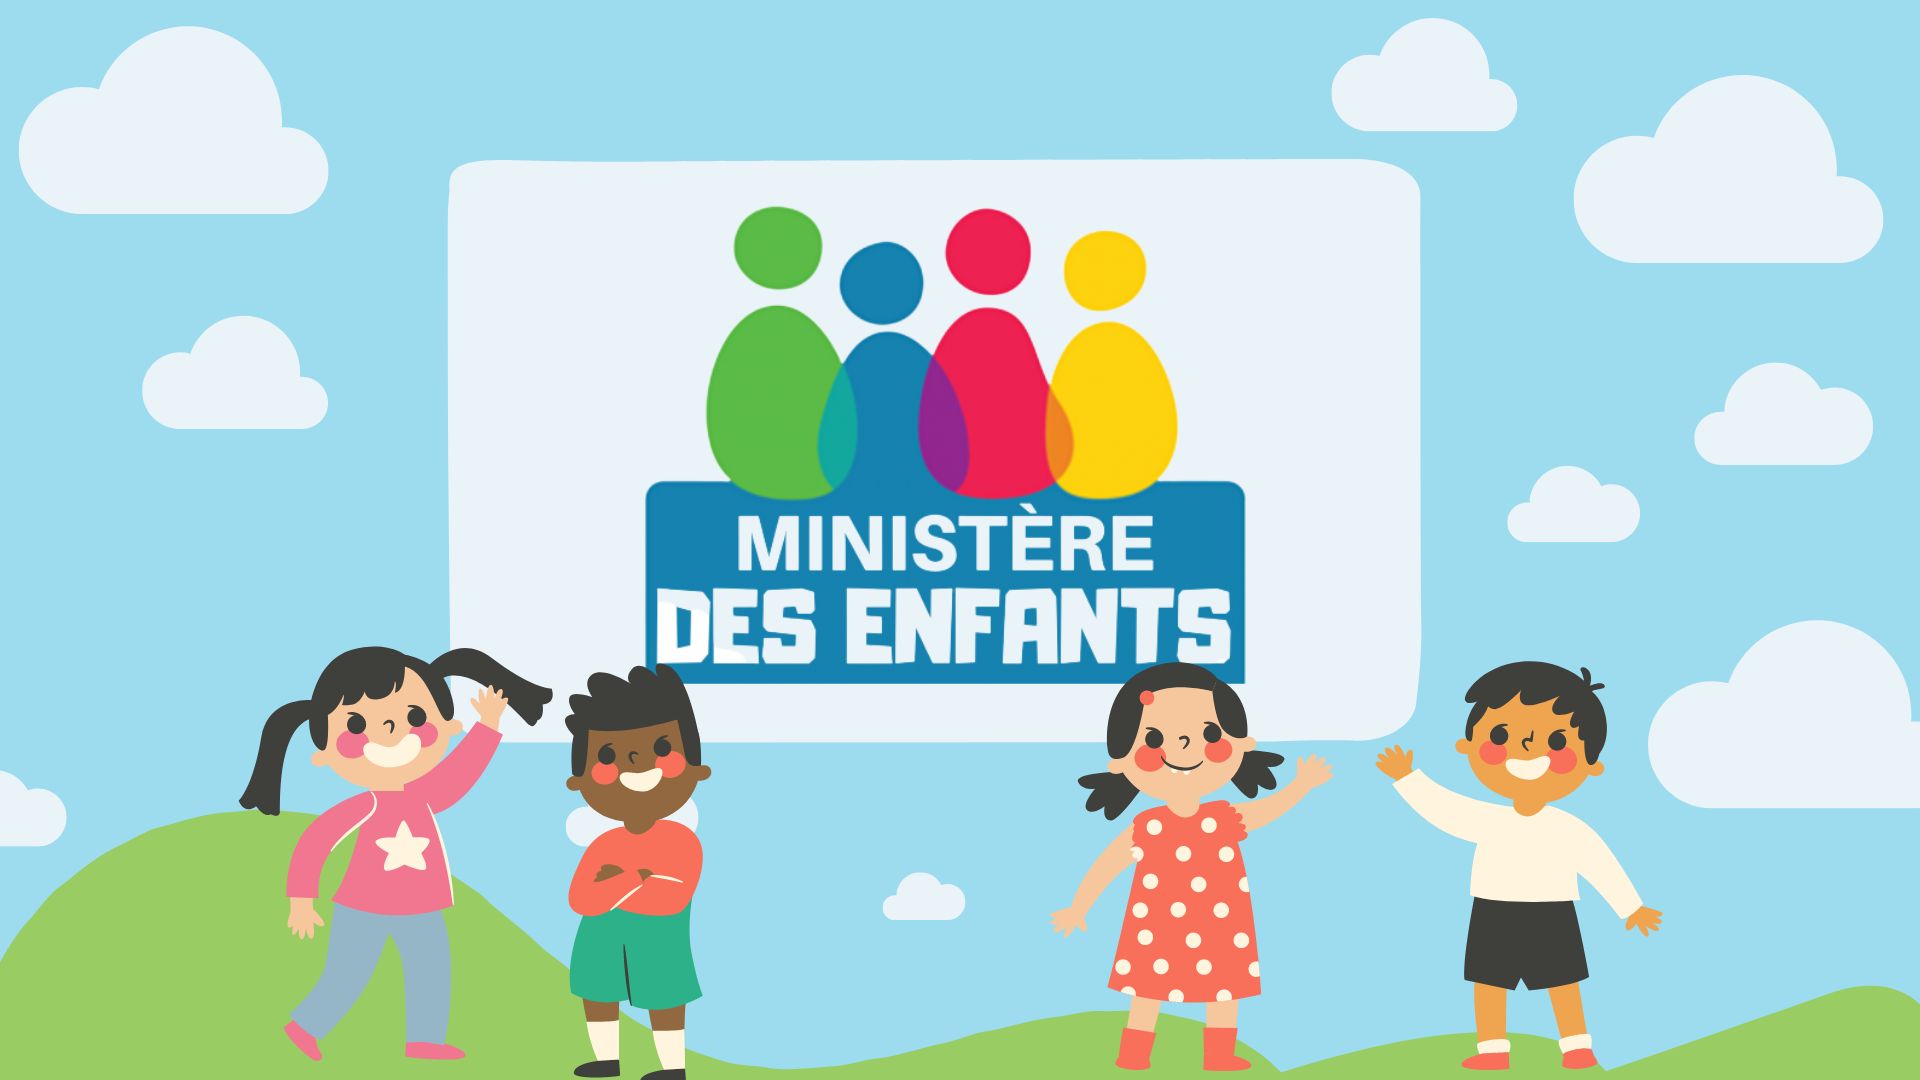 Children’s ministry